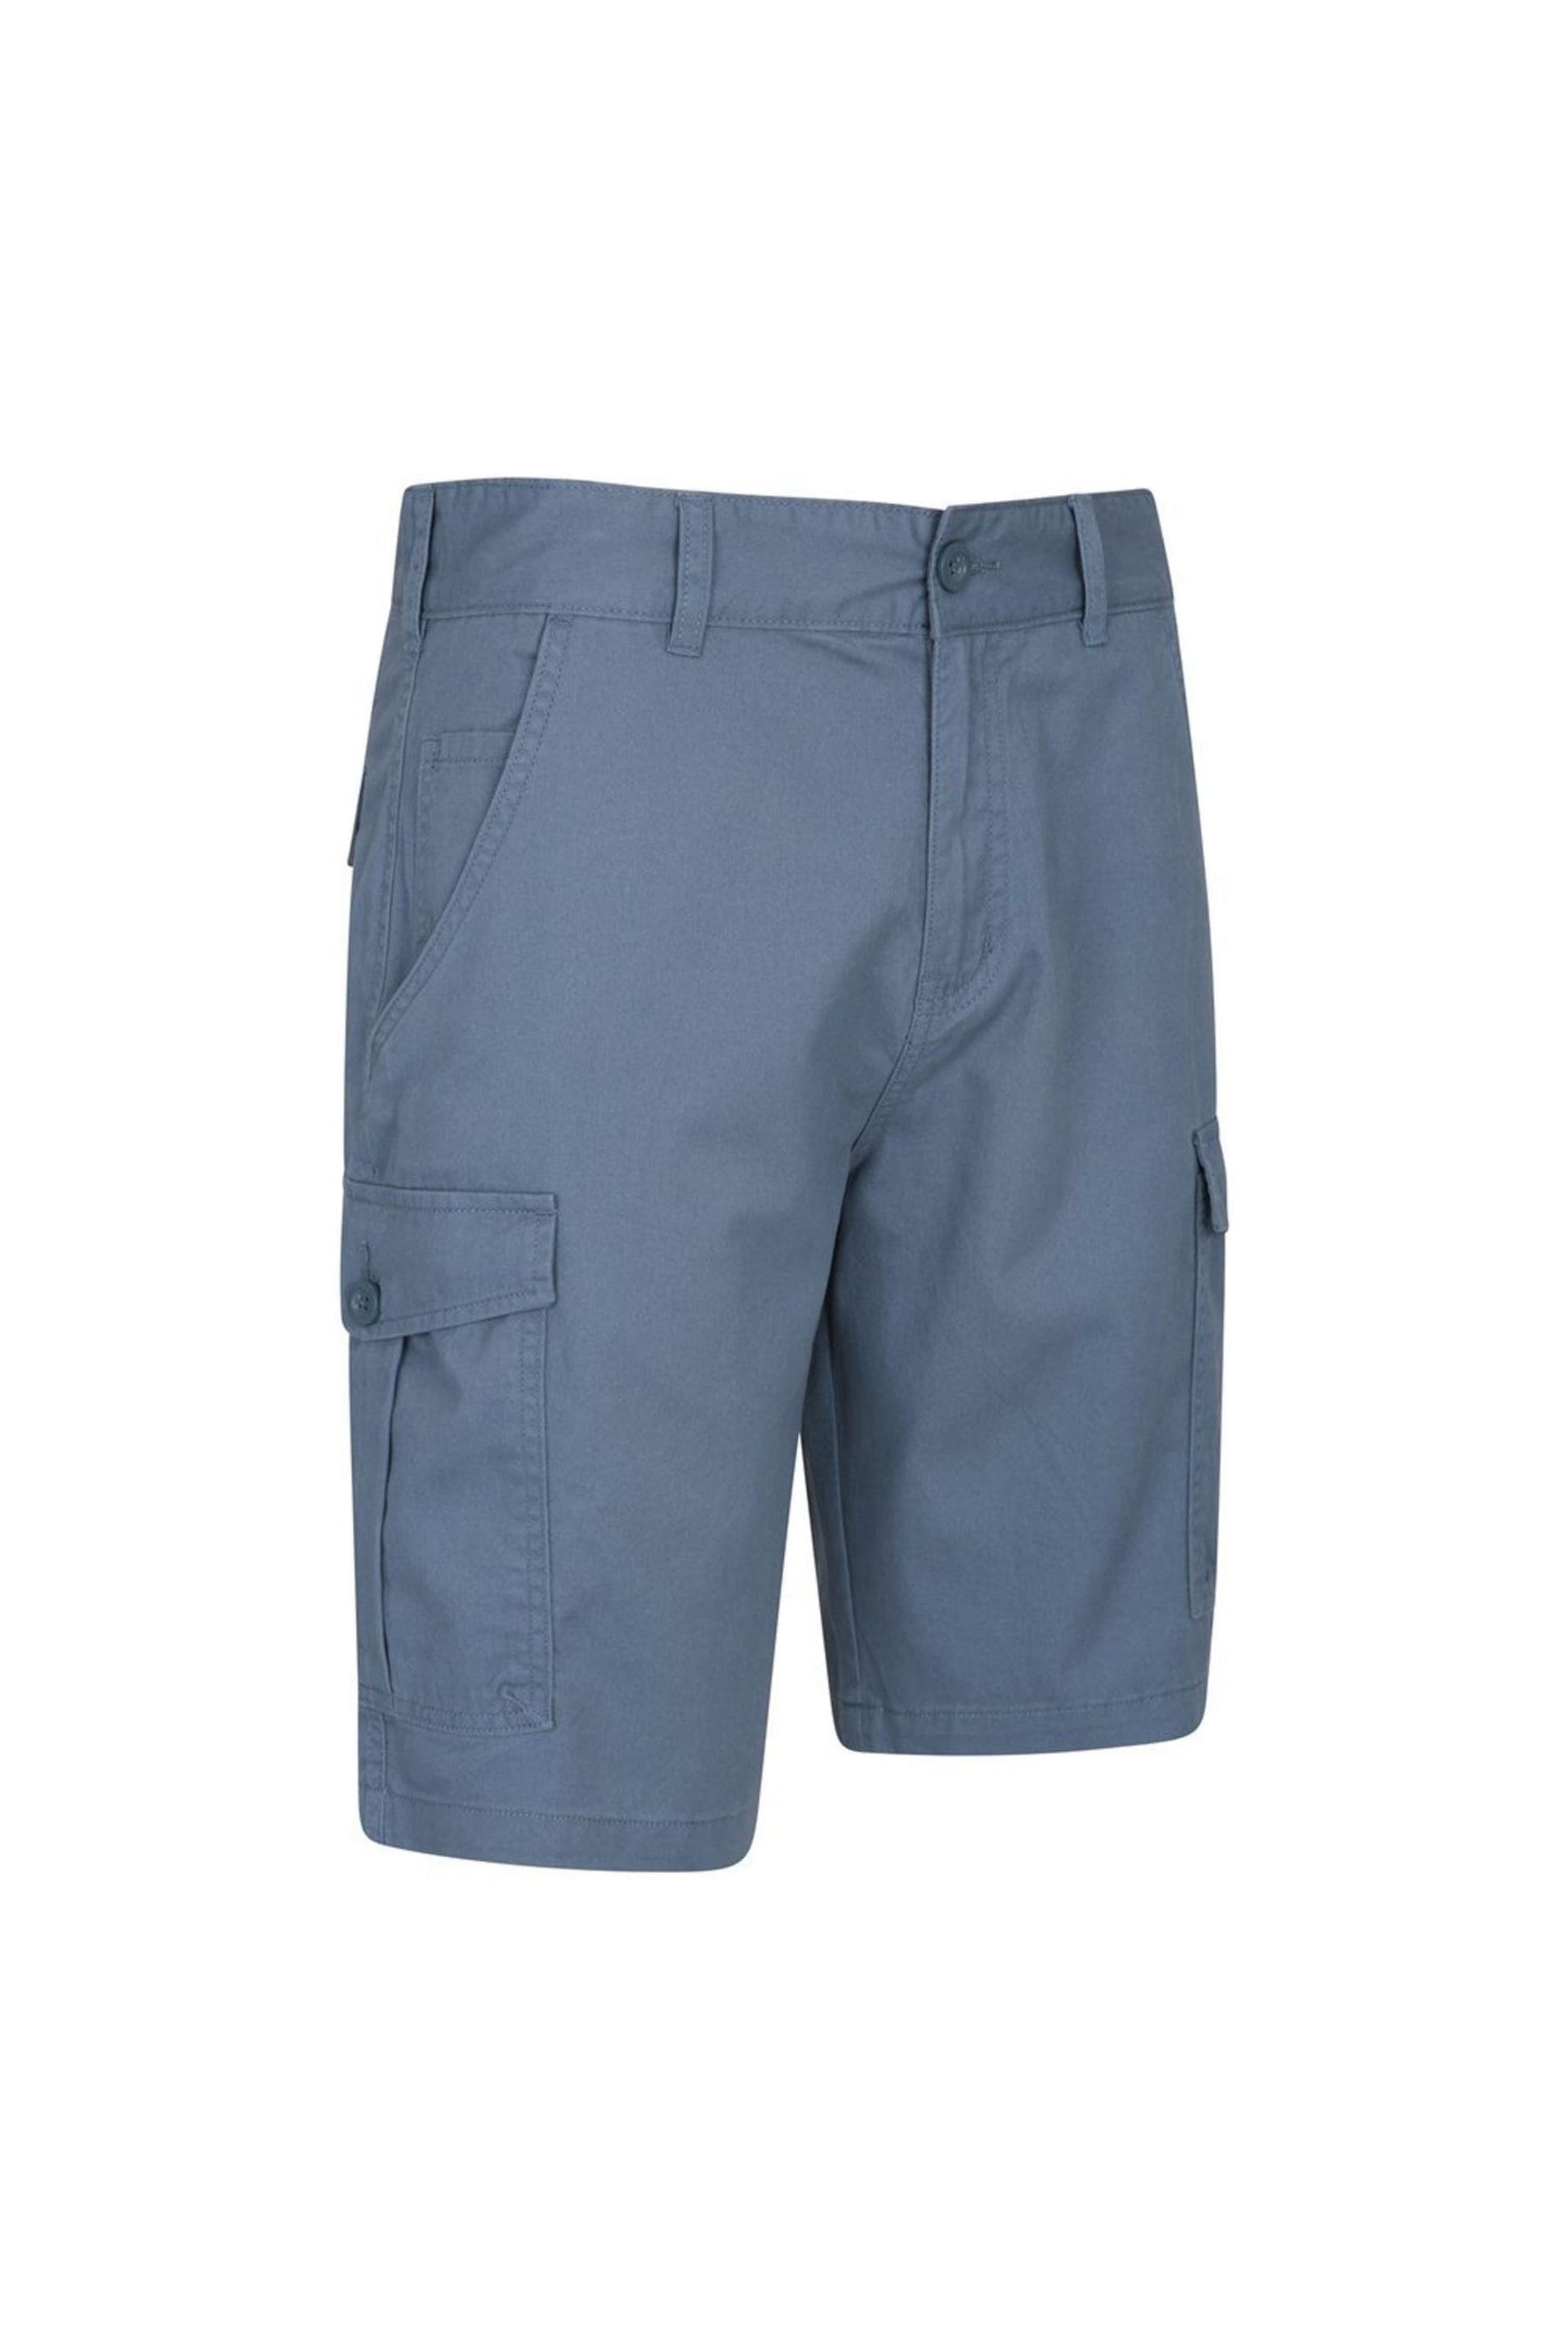 Mountain Warehouse Blue Lakeside Mens Cargo Shorts - Image 3 of 4